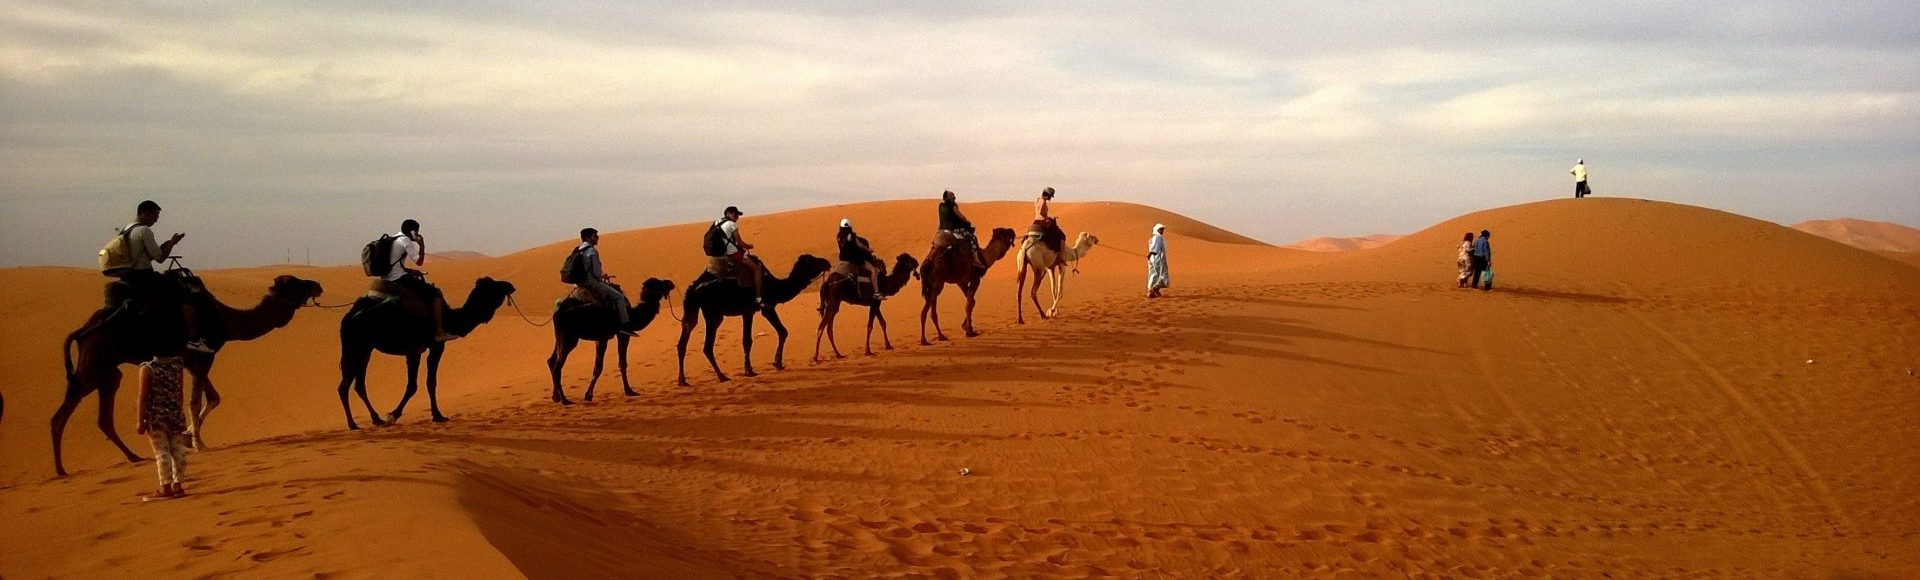 Book Your Dubai Desert Safari Tour with Al Ghubaiba Tourism